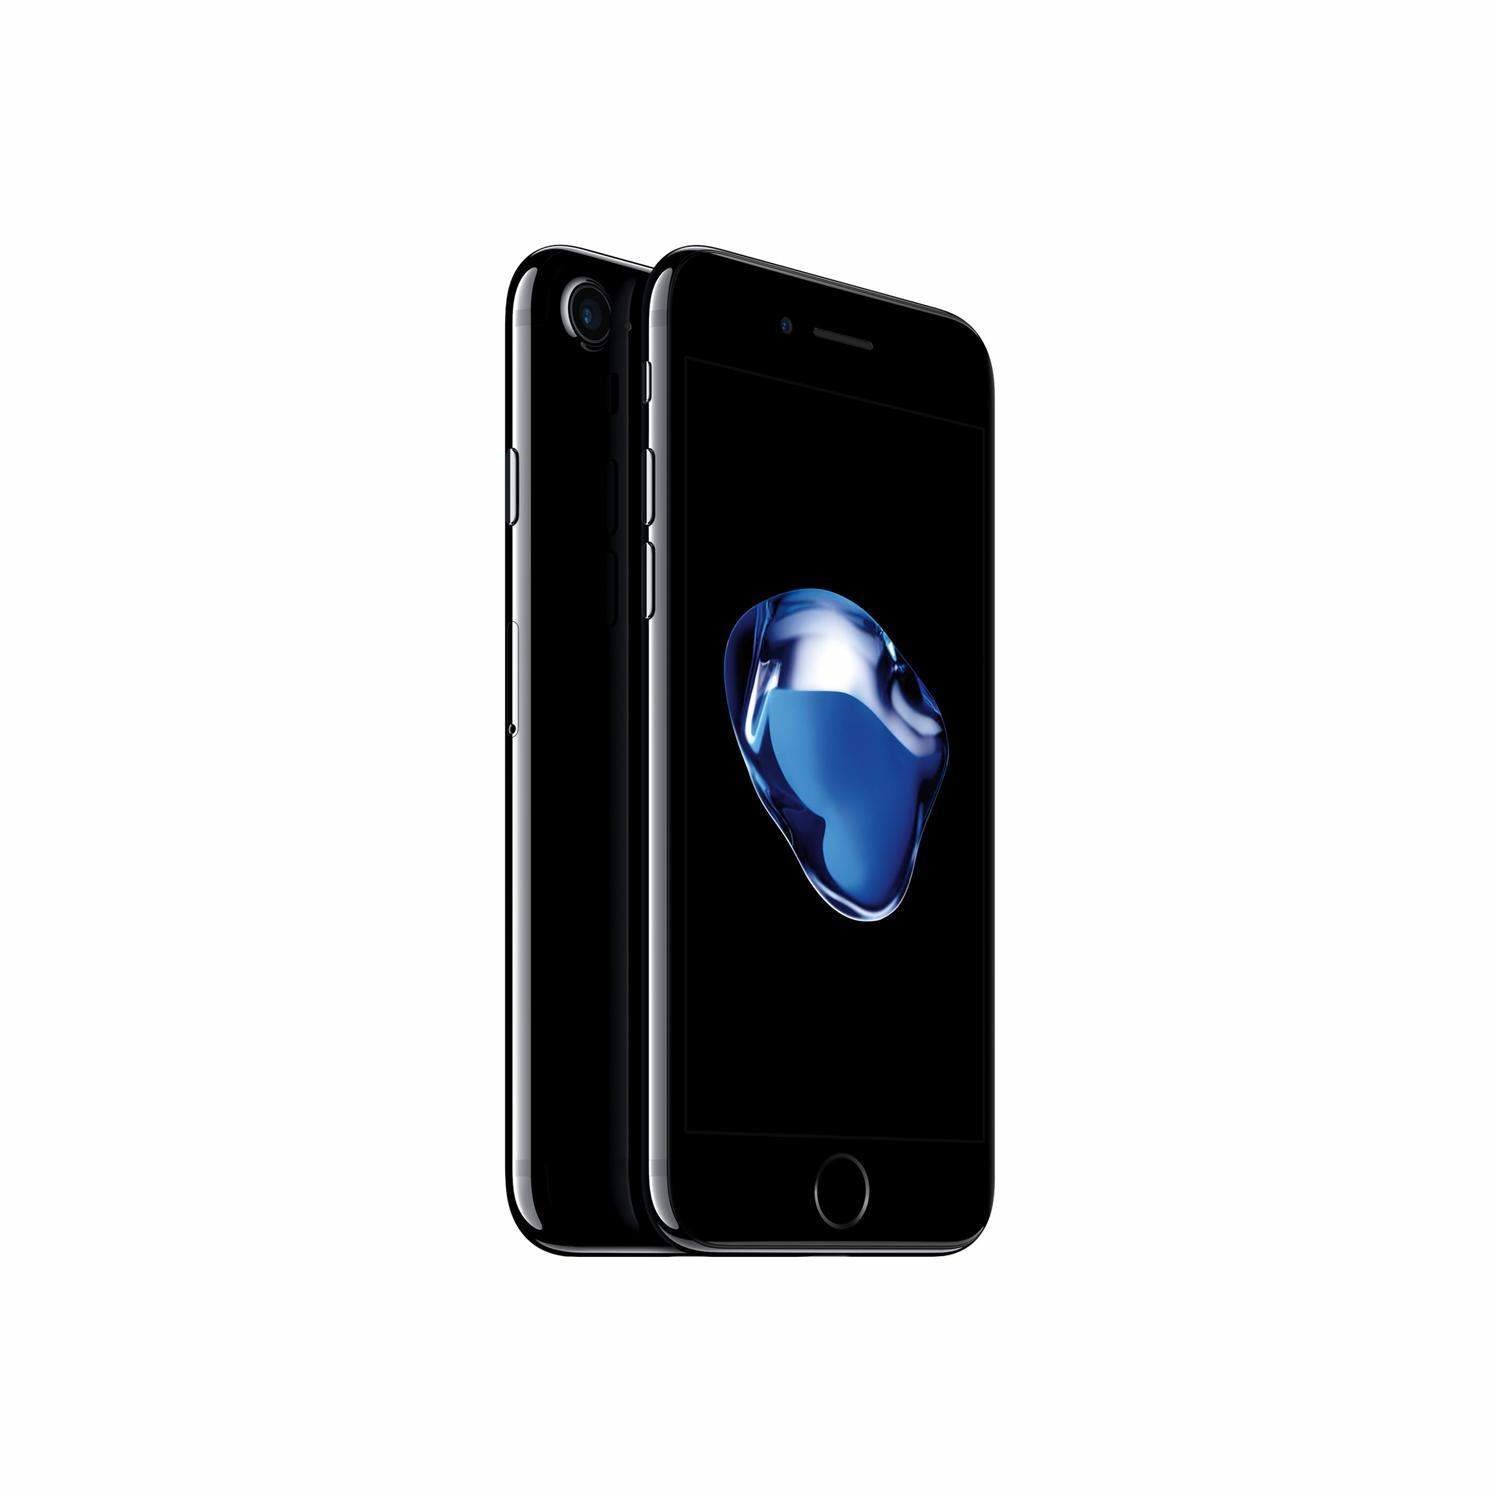 Apple iPhone 7 Jet Black 4.7